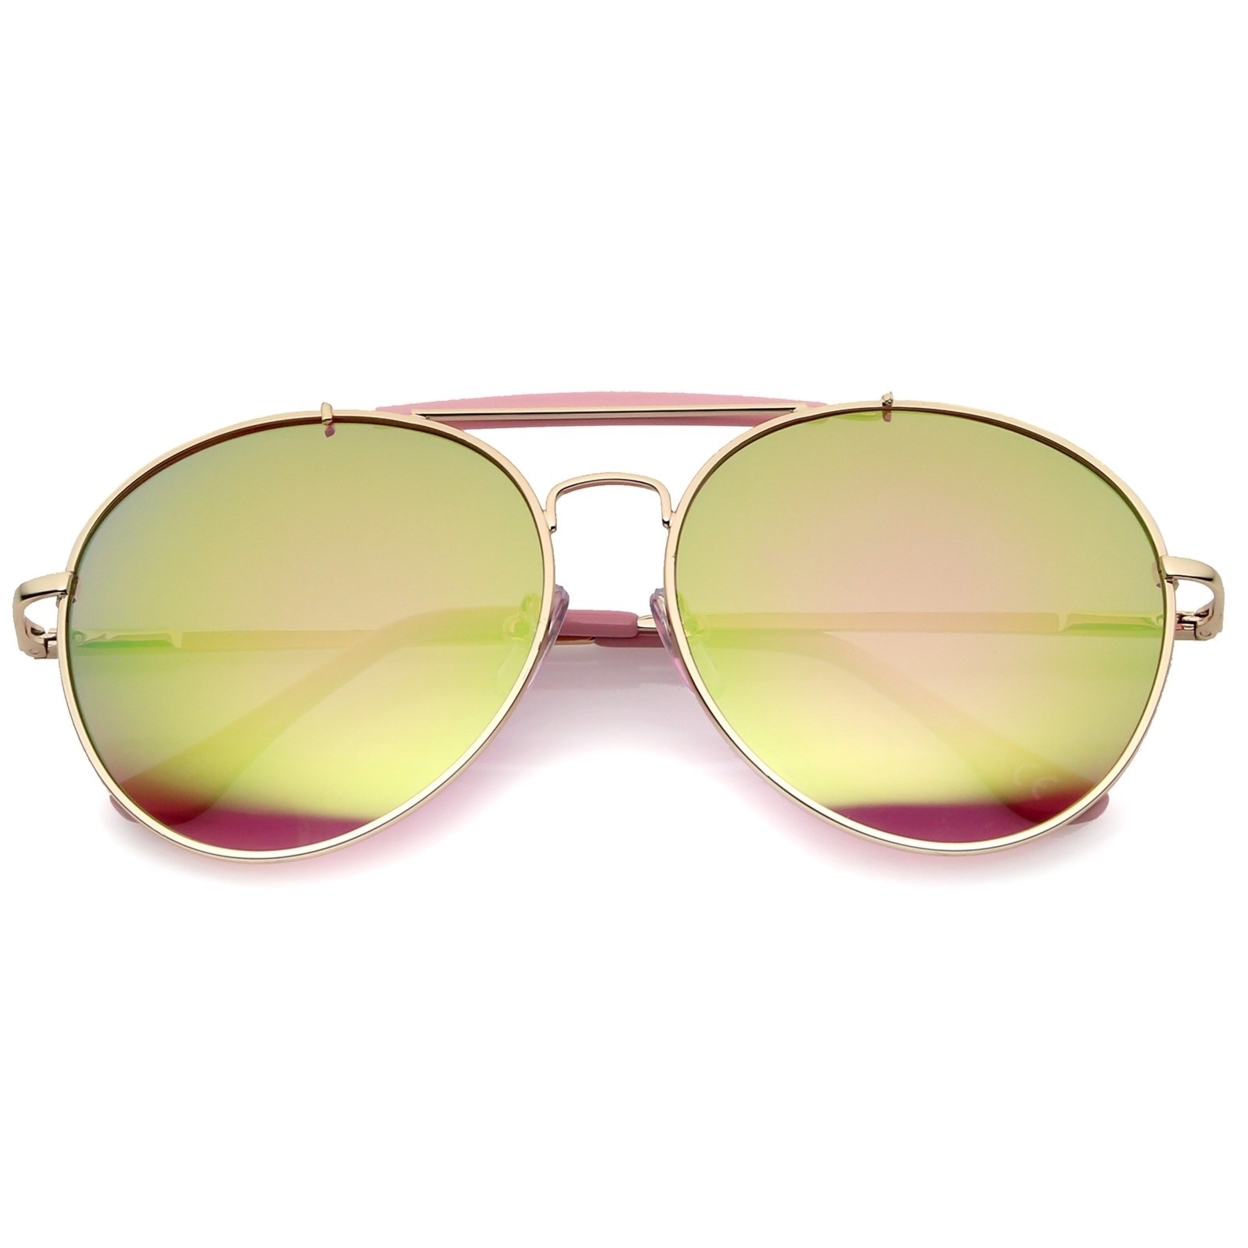 Oversize Double Nose Bridge Round Colored Mirror Lens Aviator Sunglasses 58mm - Green-Gold / Green-Blue Mirror